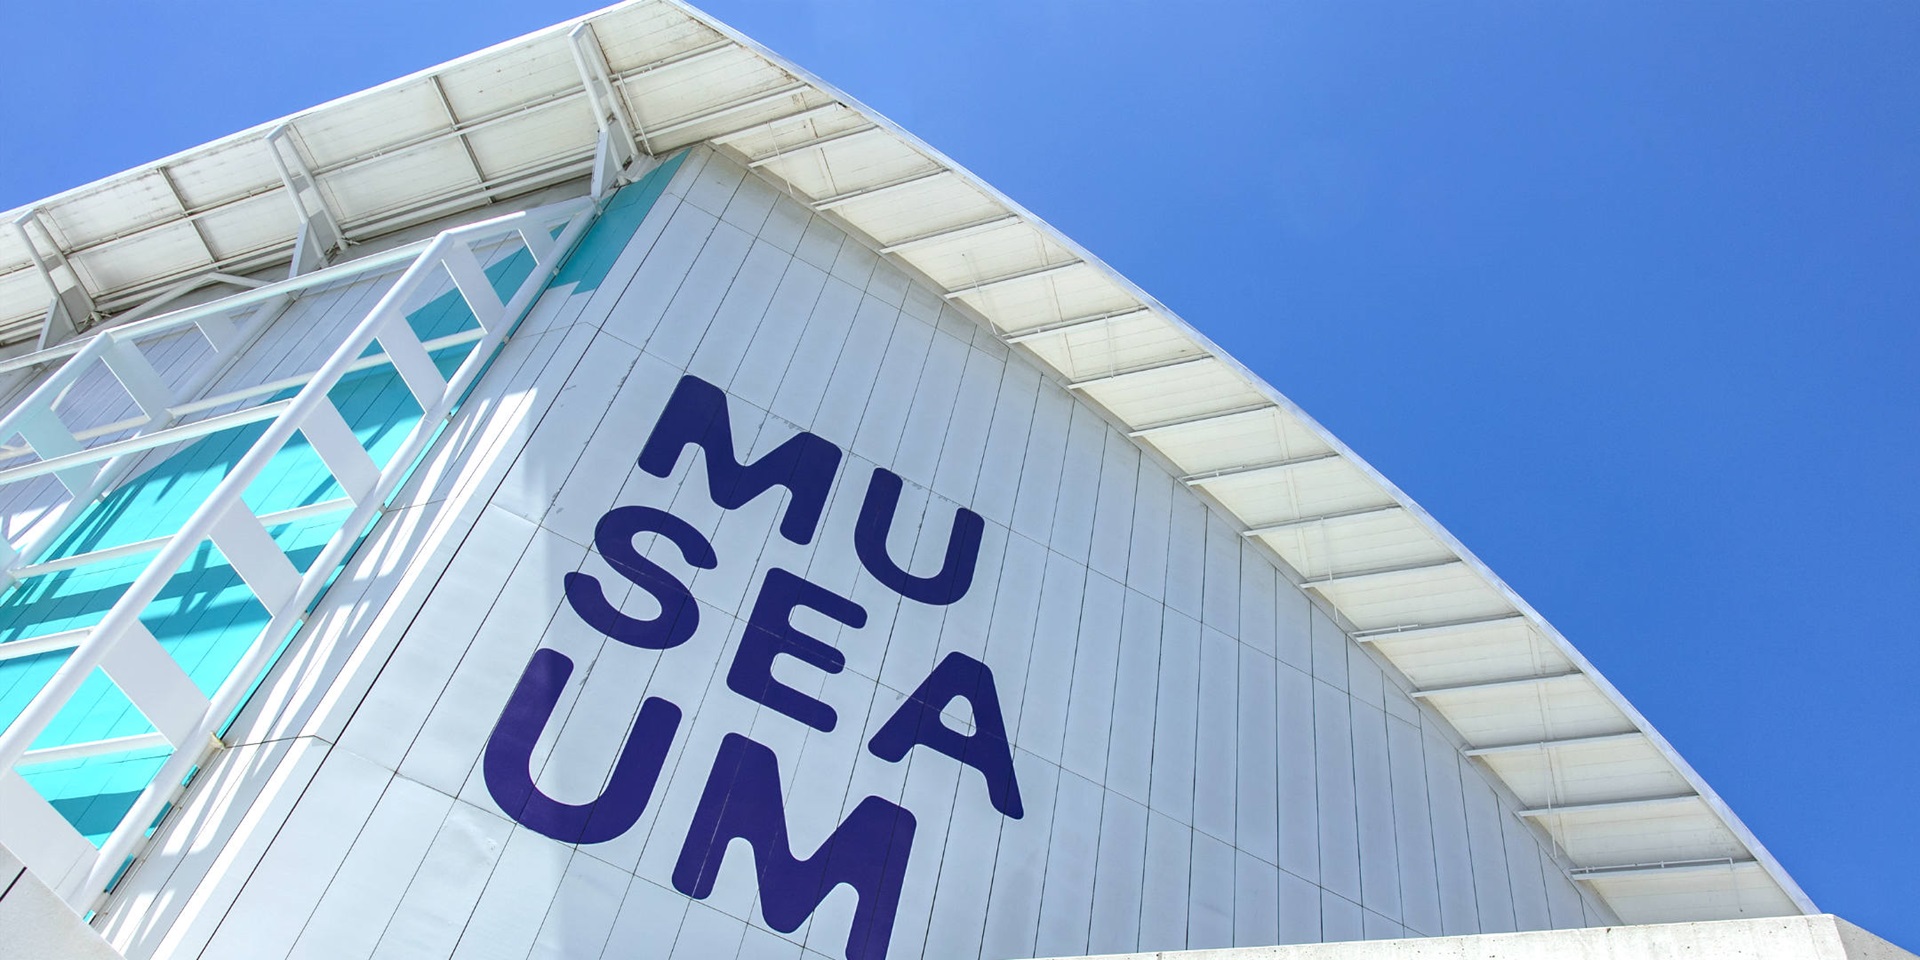 Australian National Maritime Museum - new branding 2018